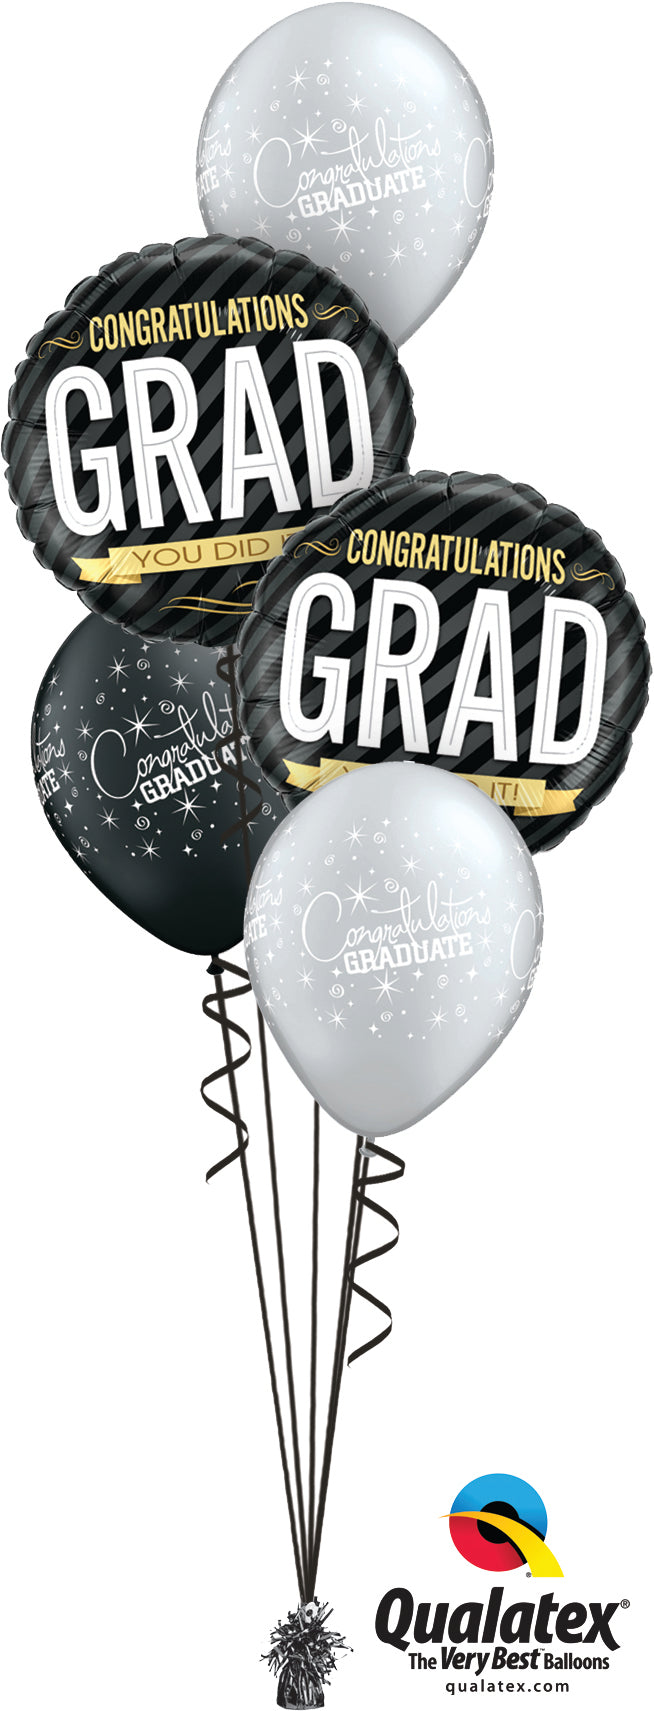 You the best Grad! - Balloon Express